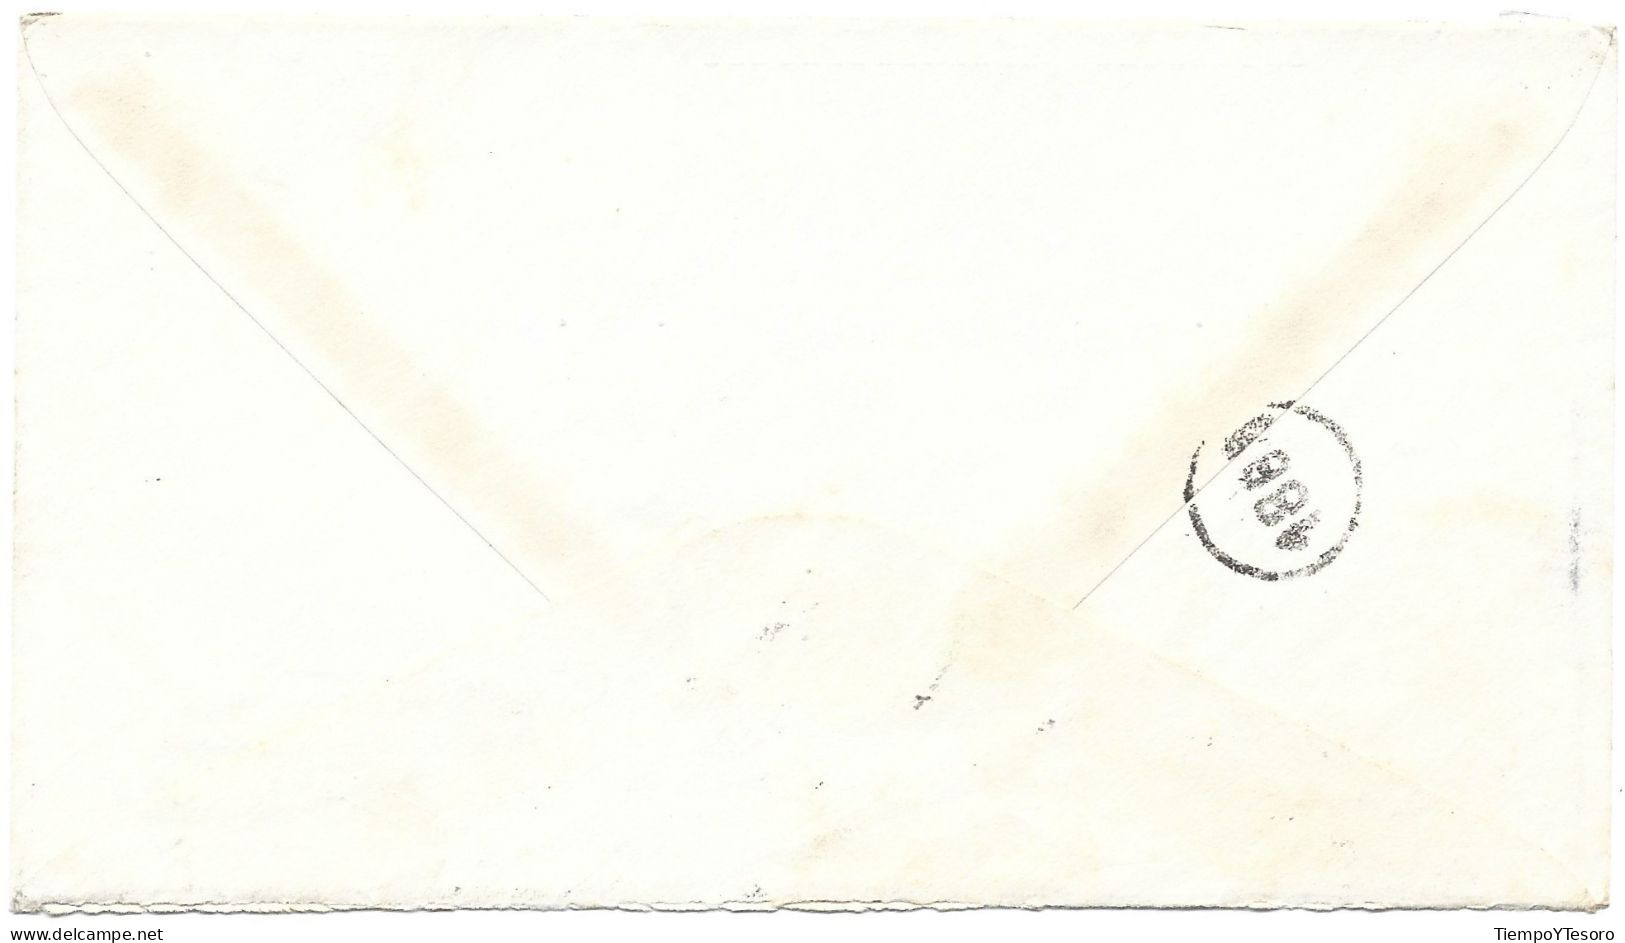 Correspondence - Cuba To Argentina, 1940, N°224 - Luftpost